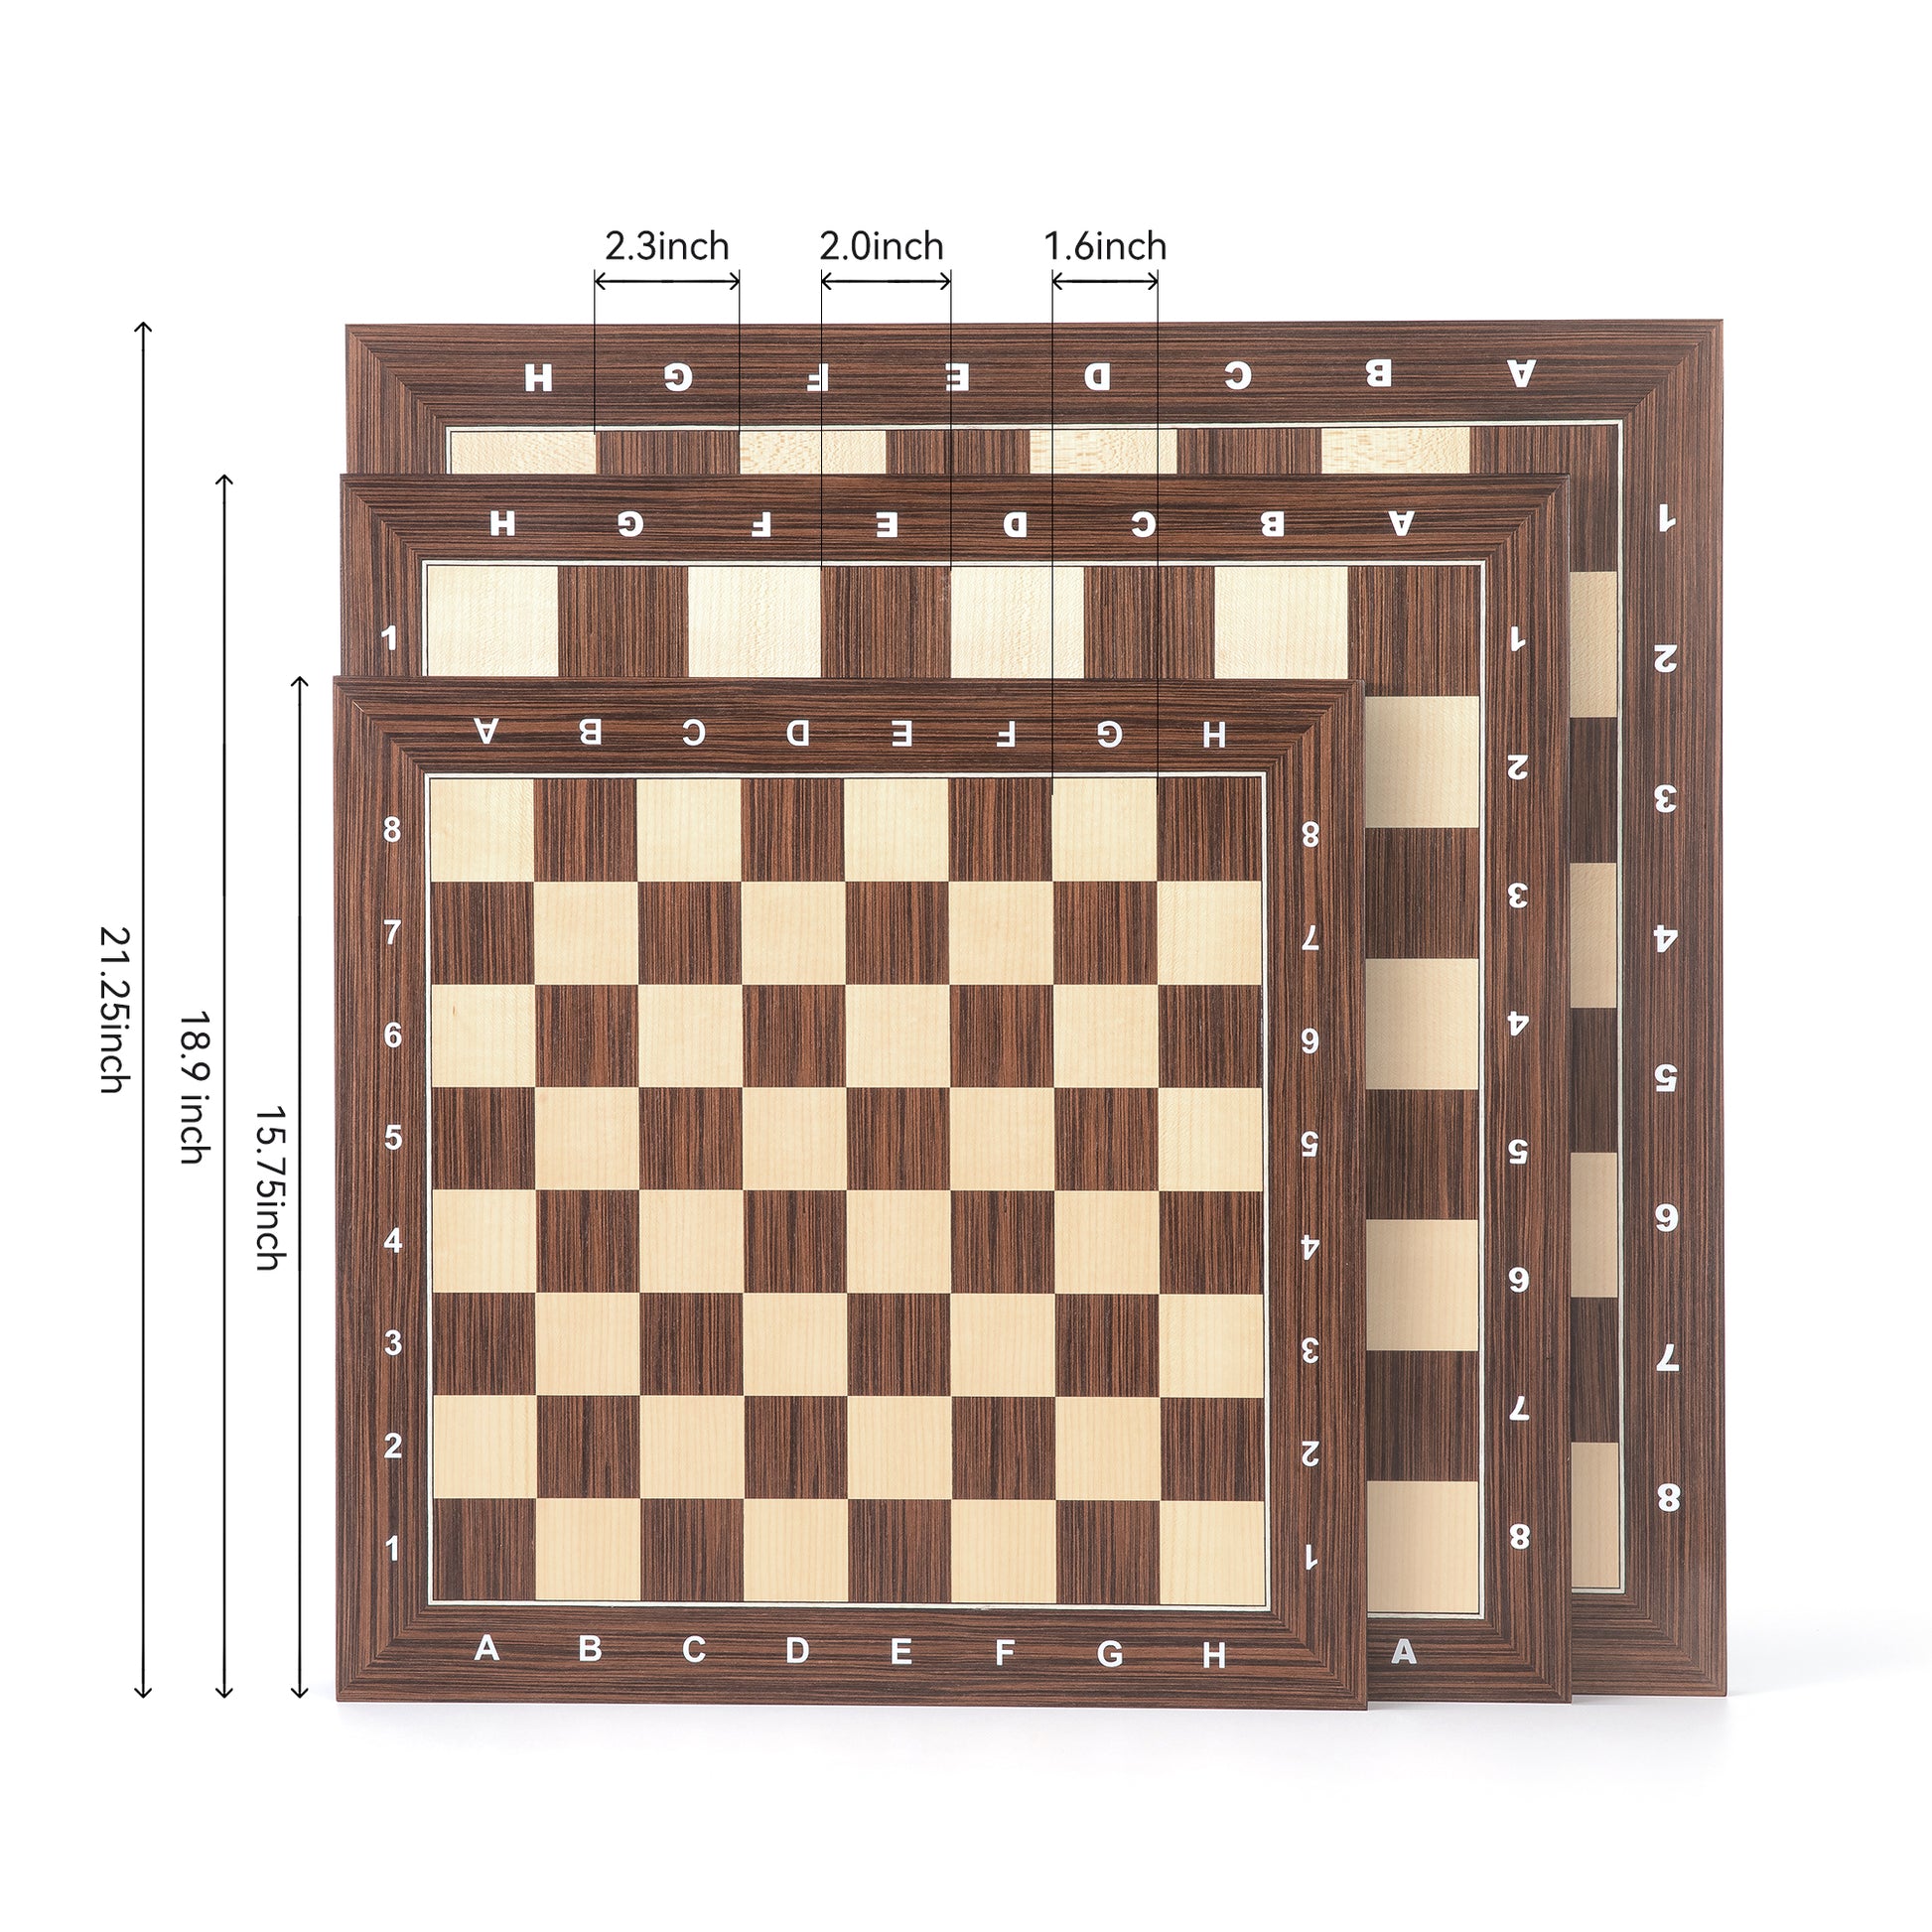 A standard chess board is an 8 x 8 regular grid of